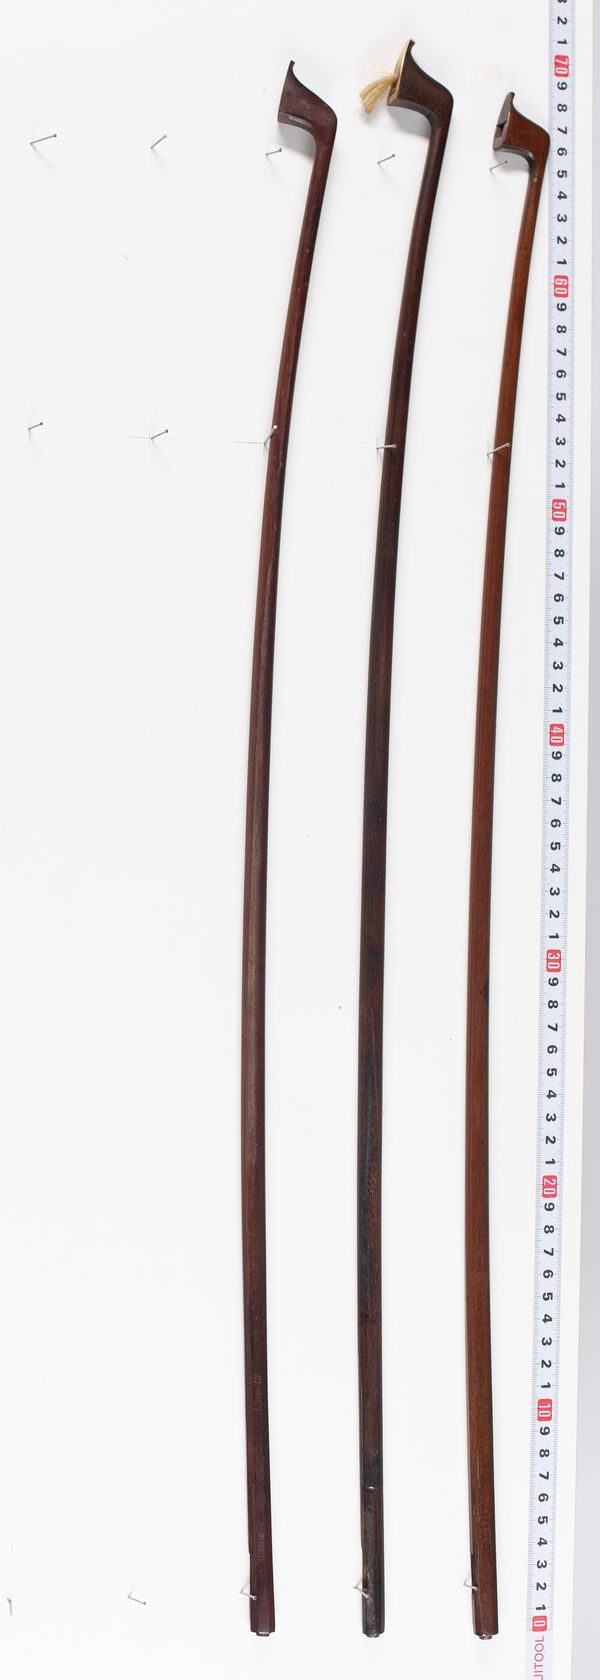 Three bow sticks branded Dodd, varying lengths